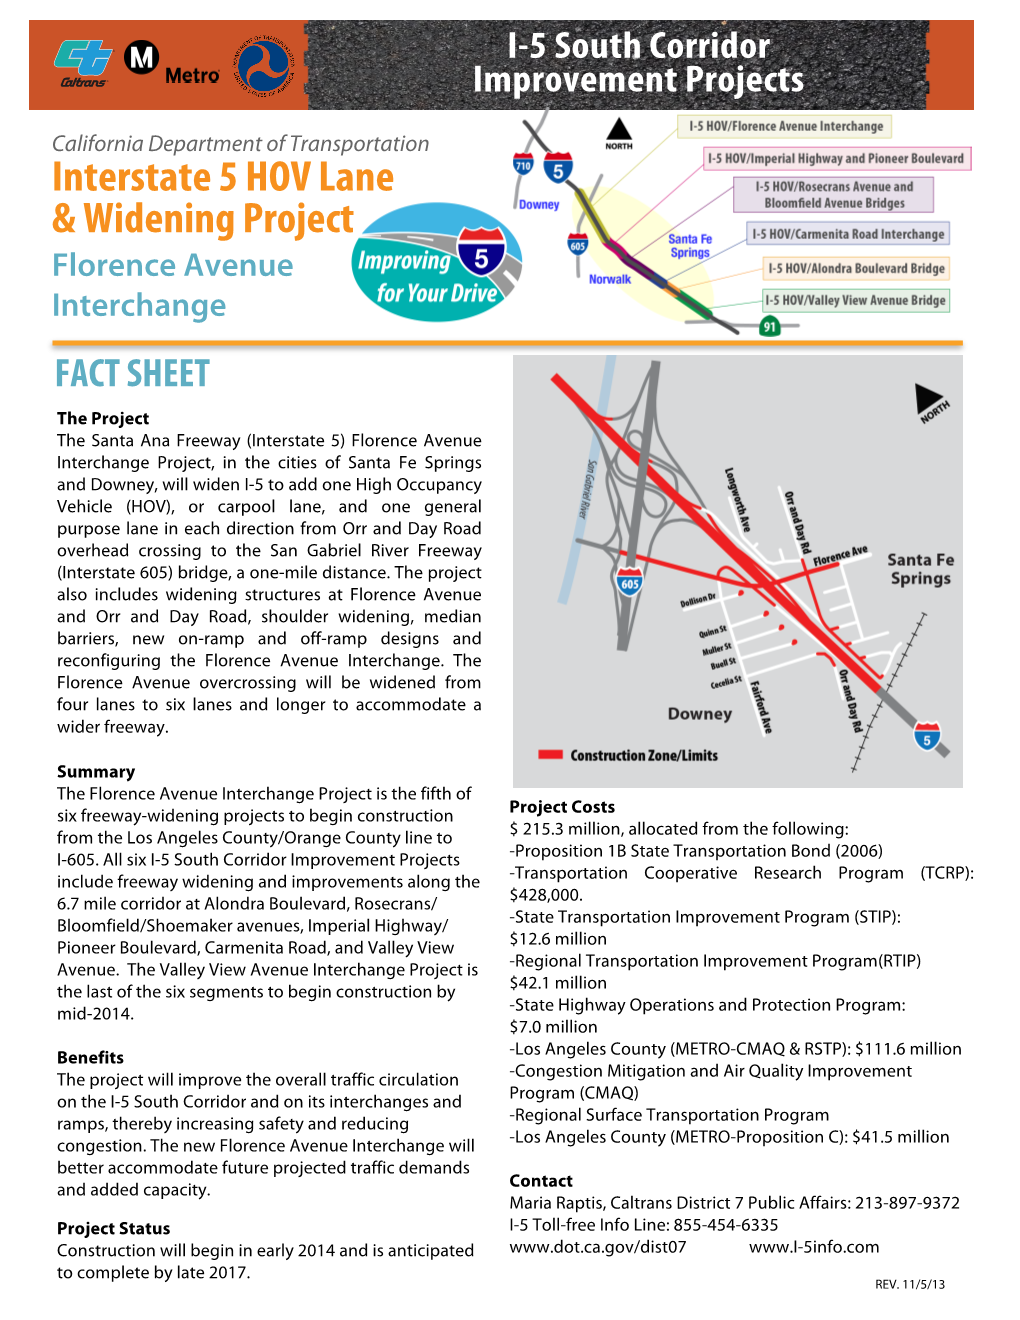 Florence Avenue Interchange Fact Sheet